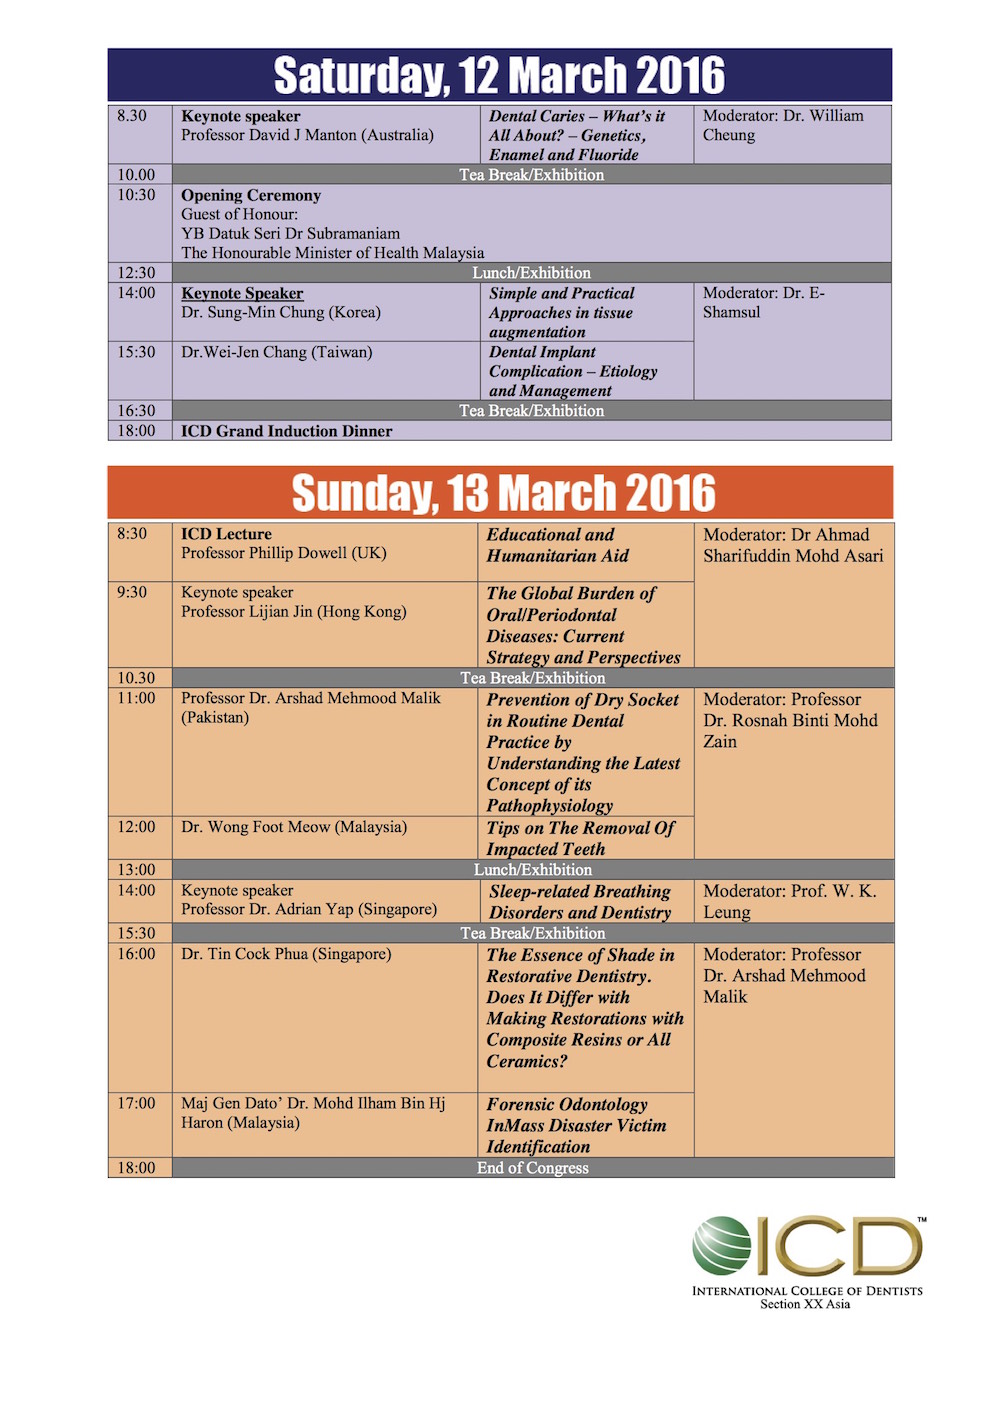 17-2-16-ICD-Congress-Scientific-programme-2